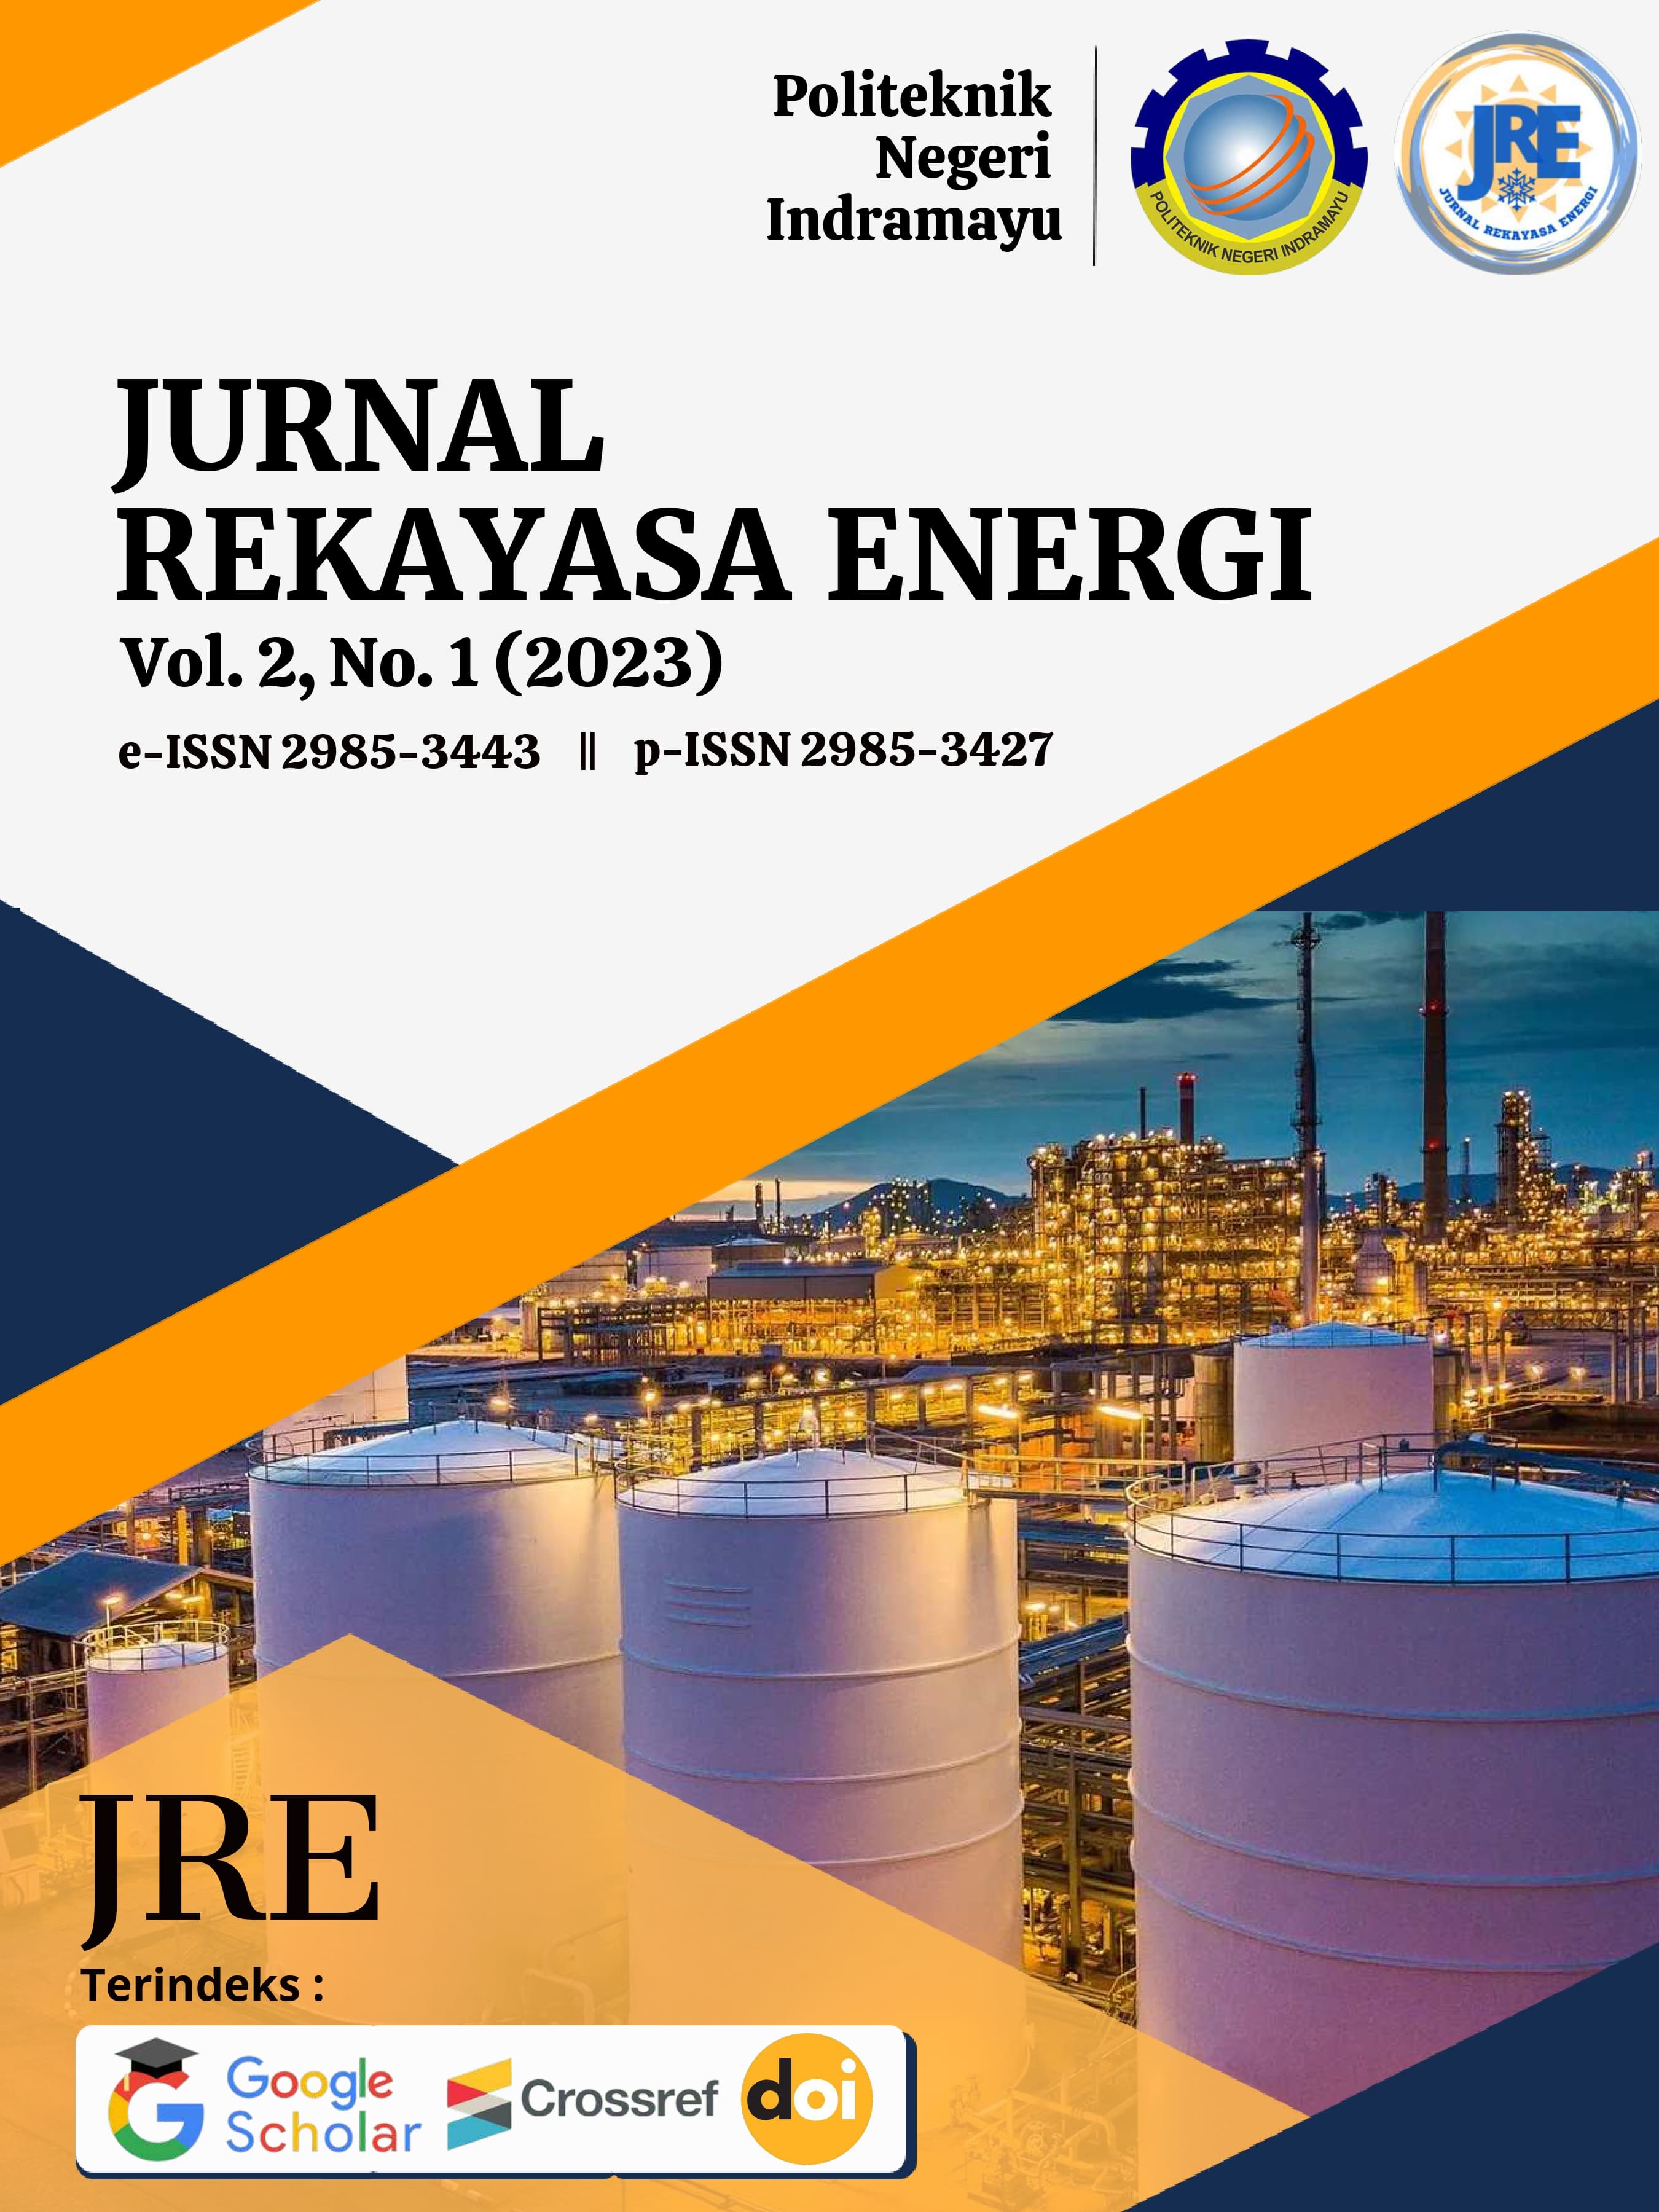 					View Vol. 2 No. 1 (2023): Jurnal Rekayasa Energi
				